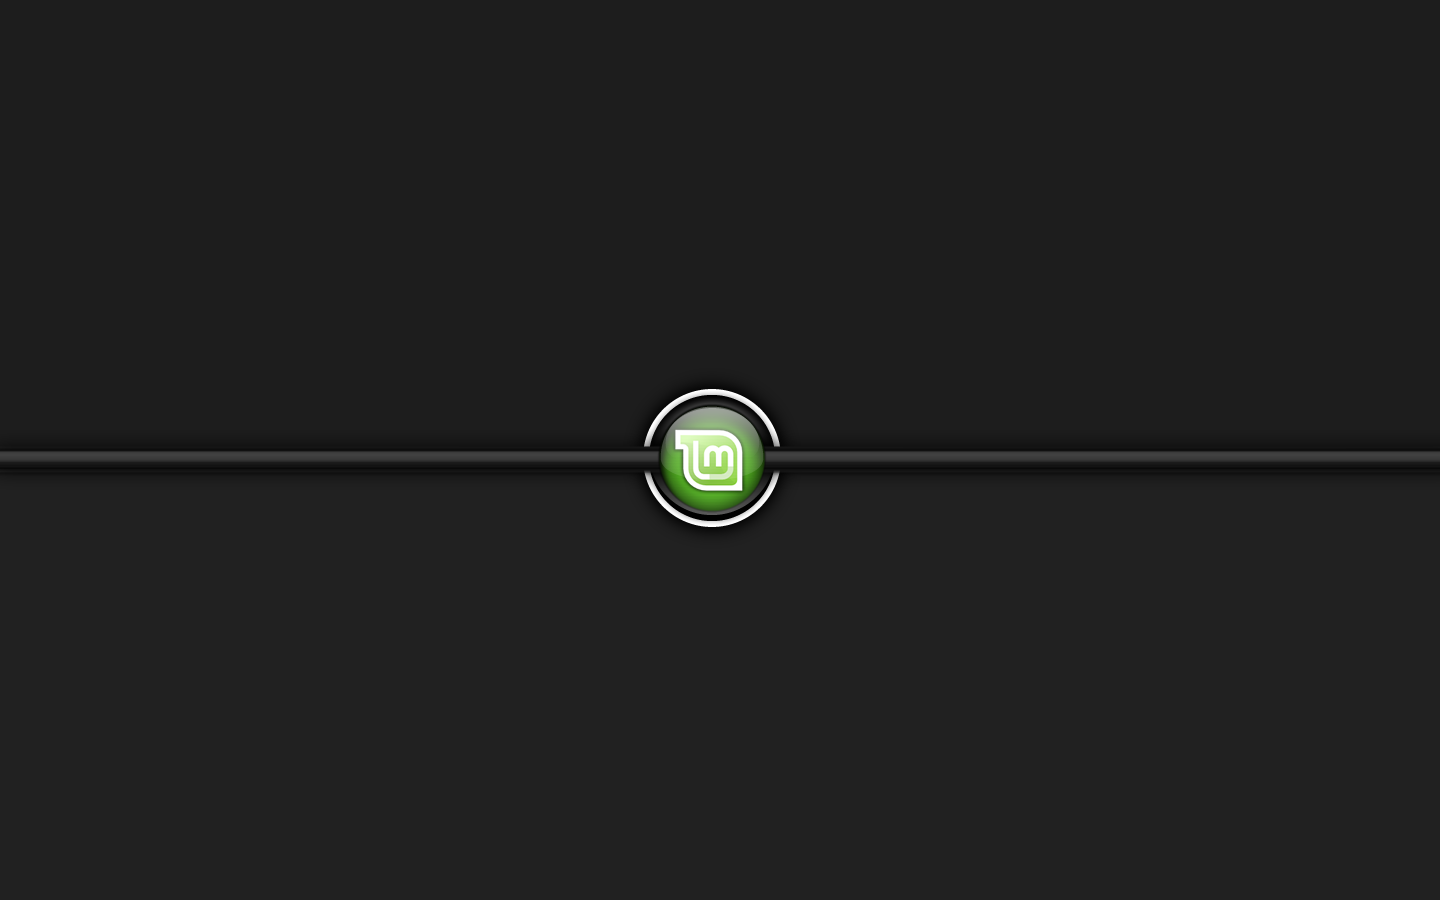 Linux Mint Background Image Logo Black